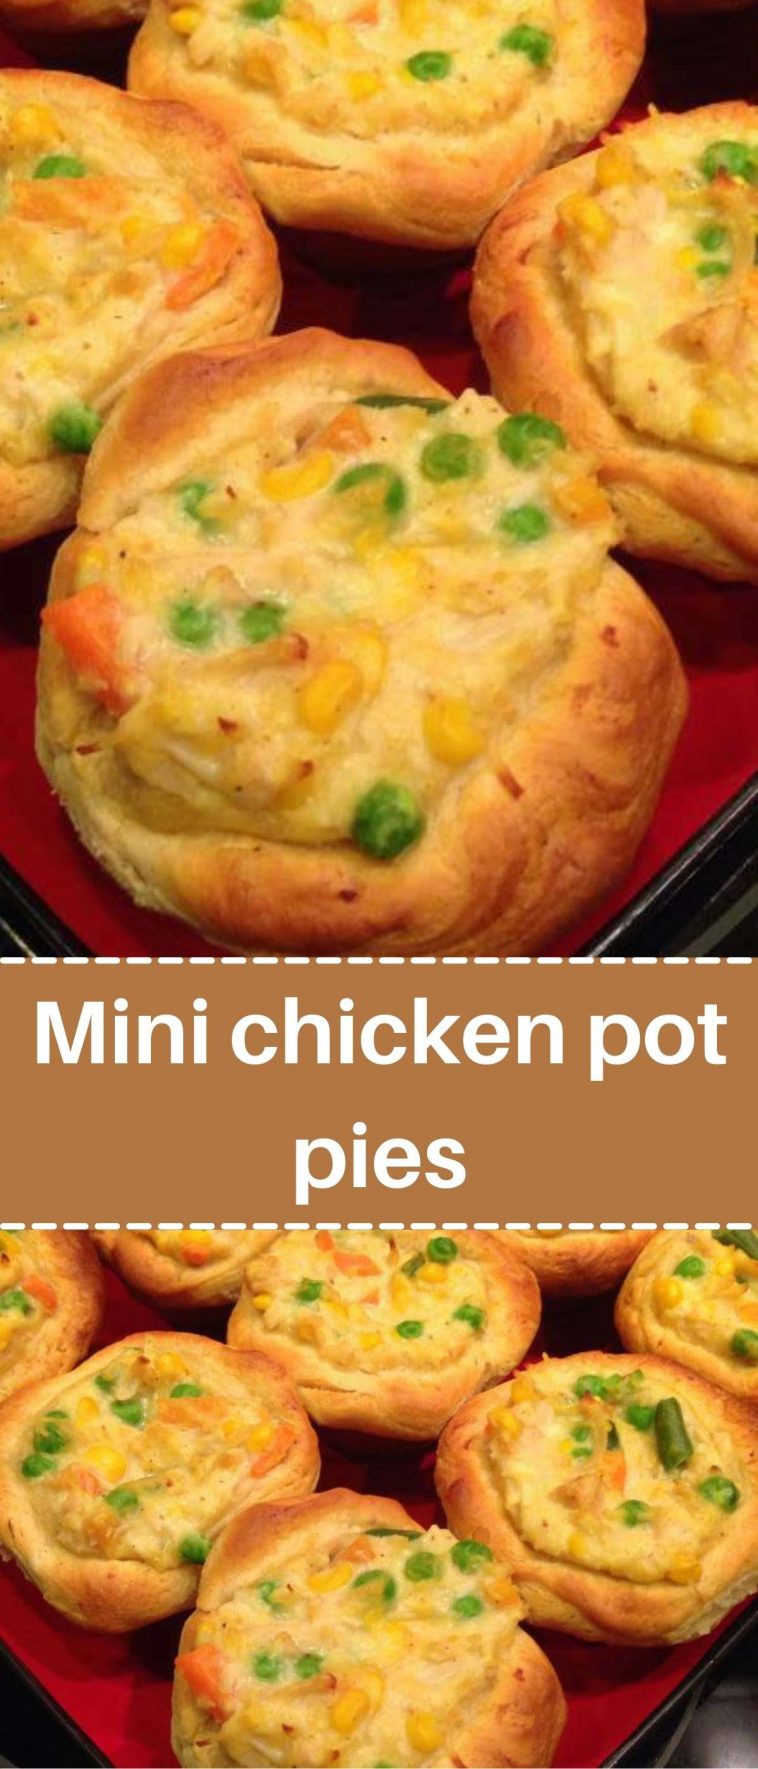 Mini chicken pot pies